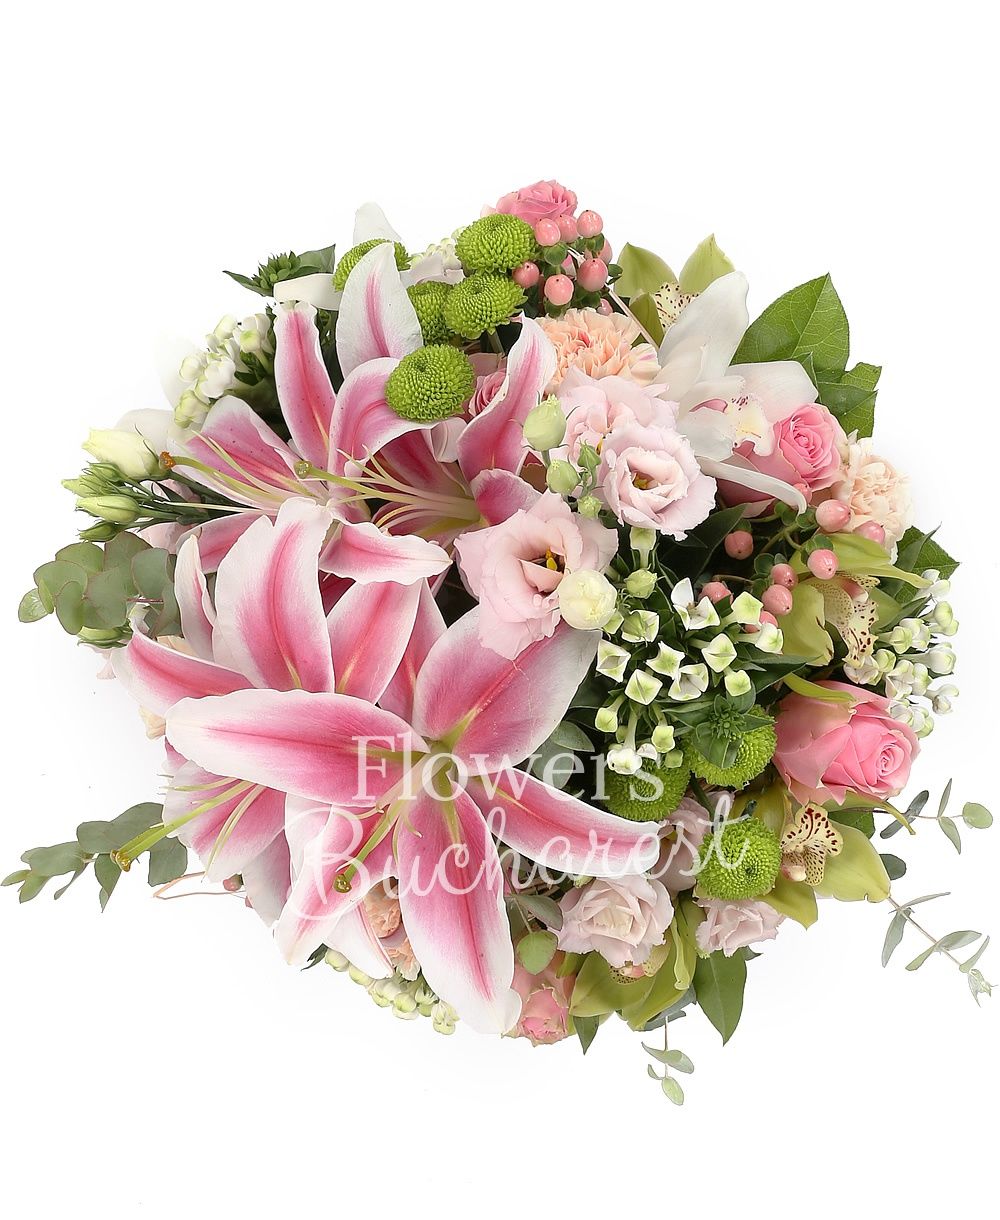 2 pink imperial lilies, 3 pink lisianthus, 5 white bouvardia, 5 green santini, 5 pink hypericum, 5 pink lisianthus, 9 pink carnations, 9 pink roses, green cymbidium, greenery